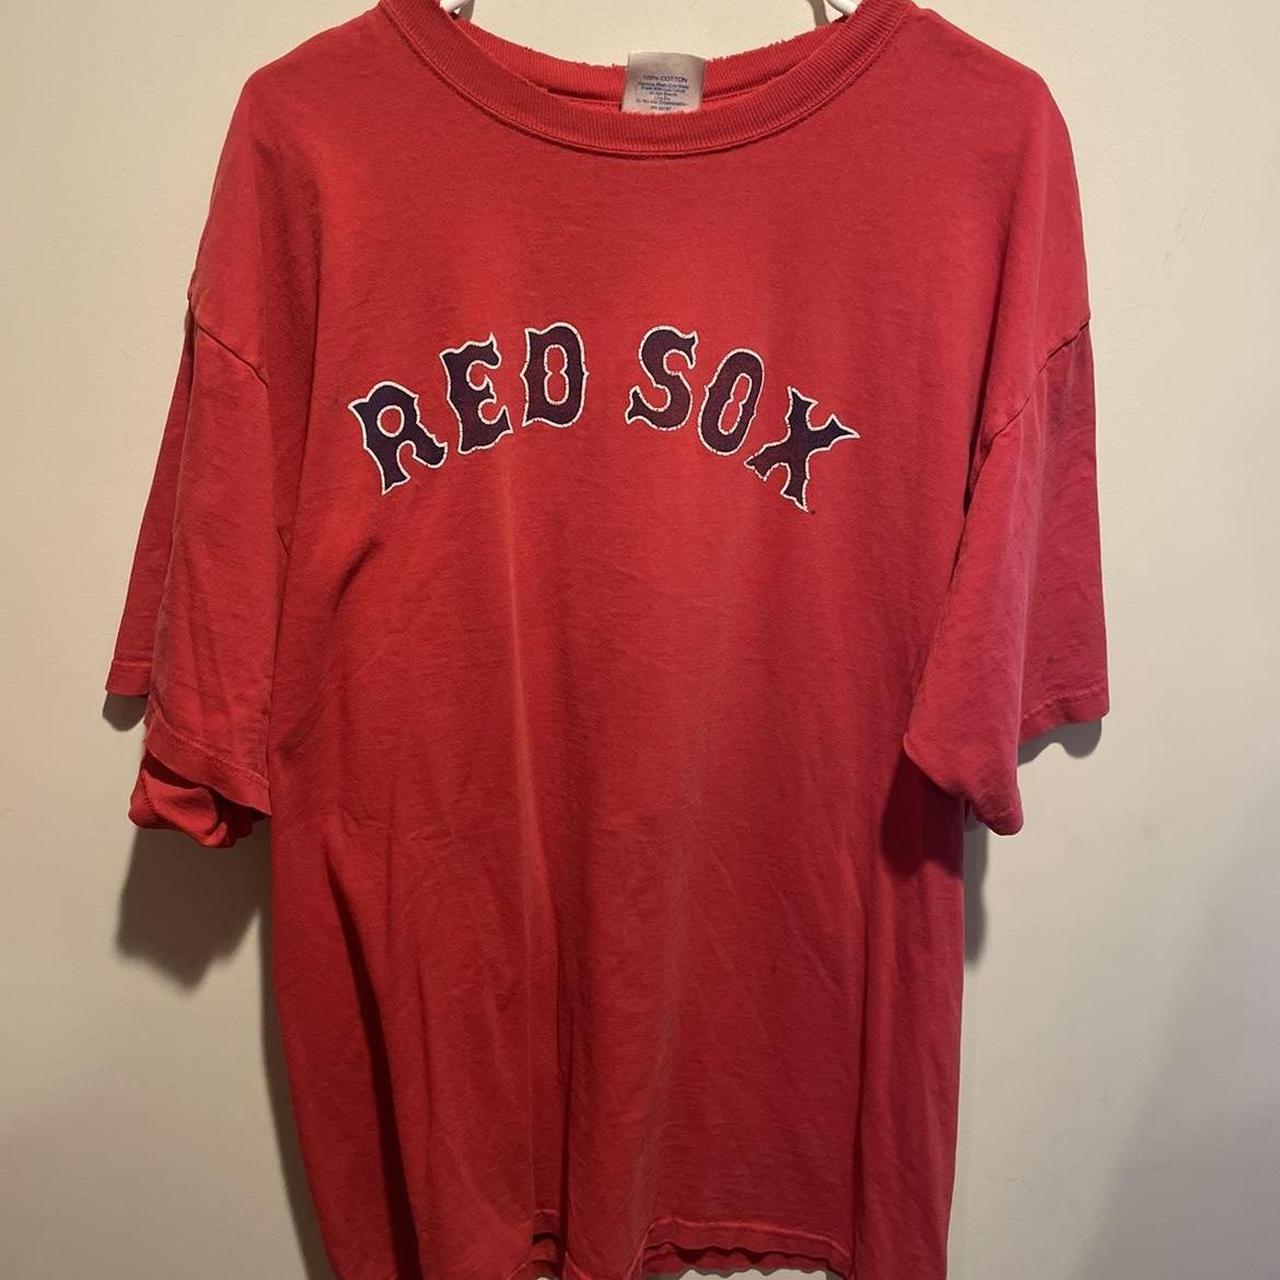 Boston Red Sox MLB *Varitek* Majestic Shirt M. Boys